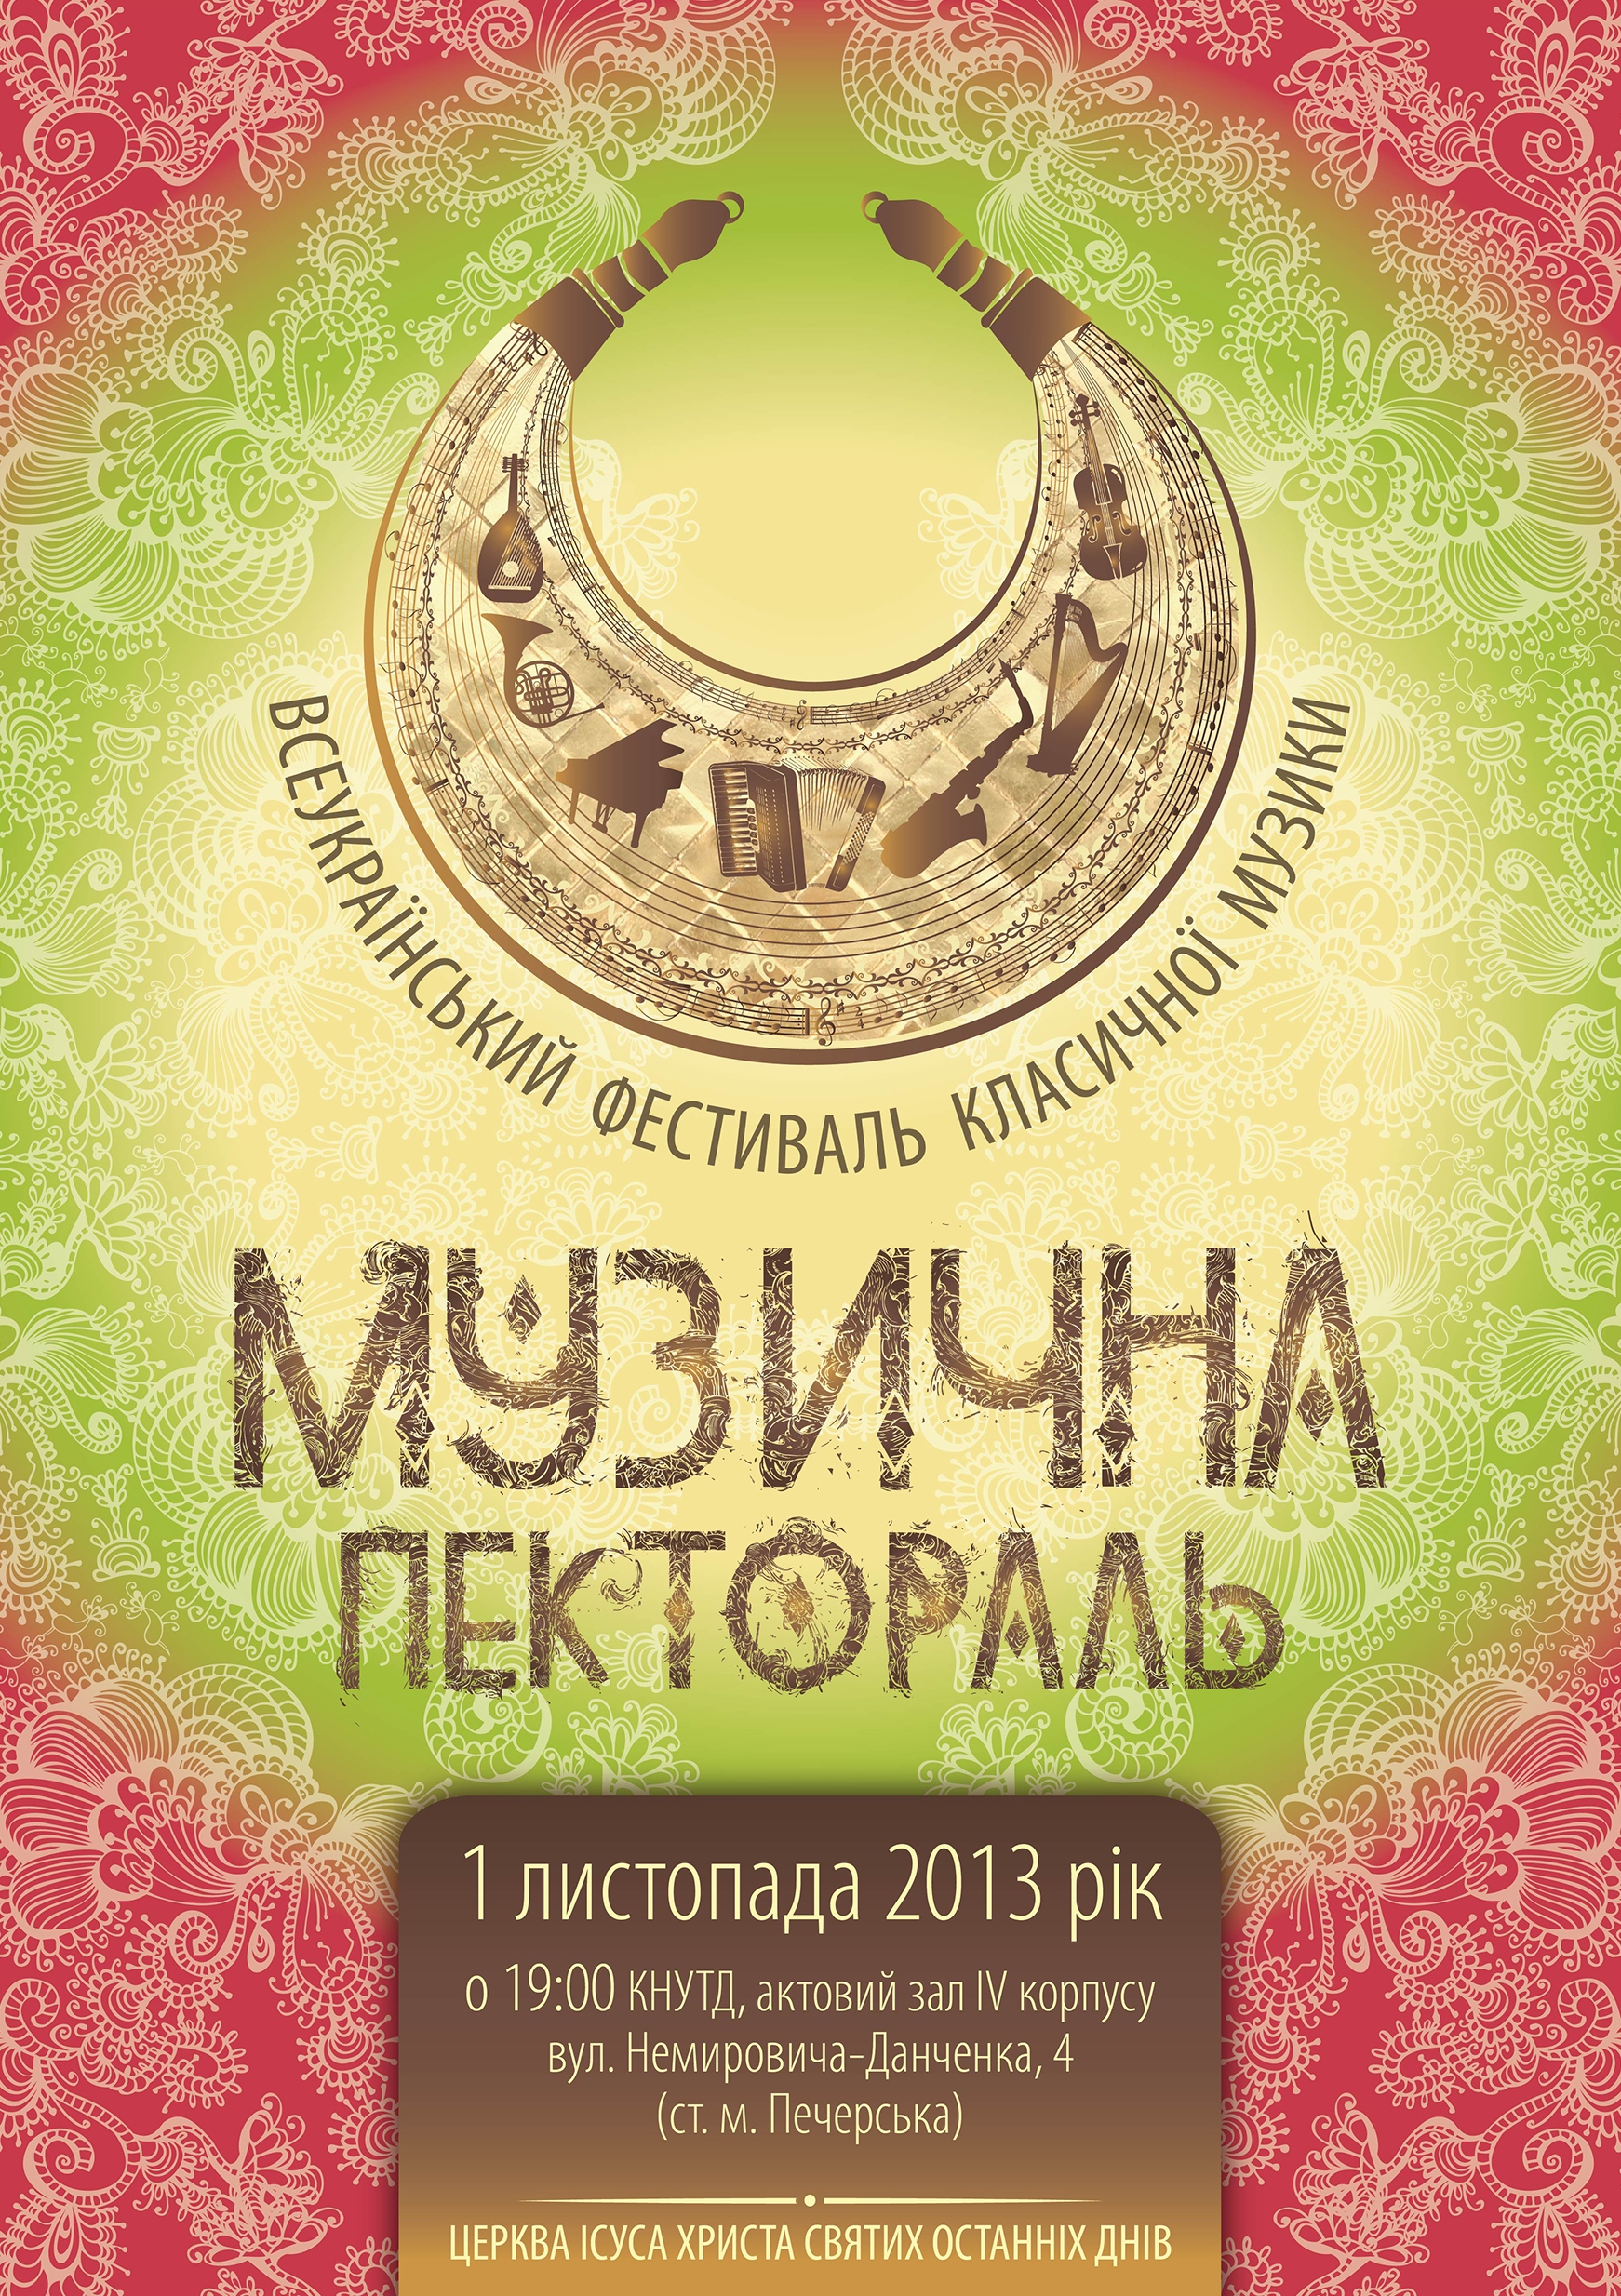 muzychna pektoral festival v kyevi